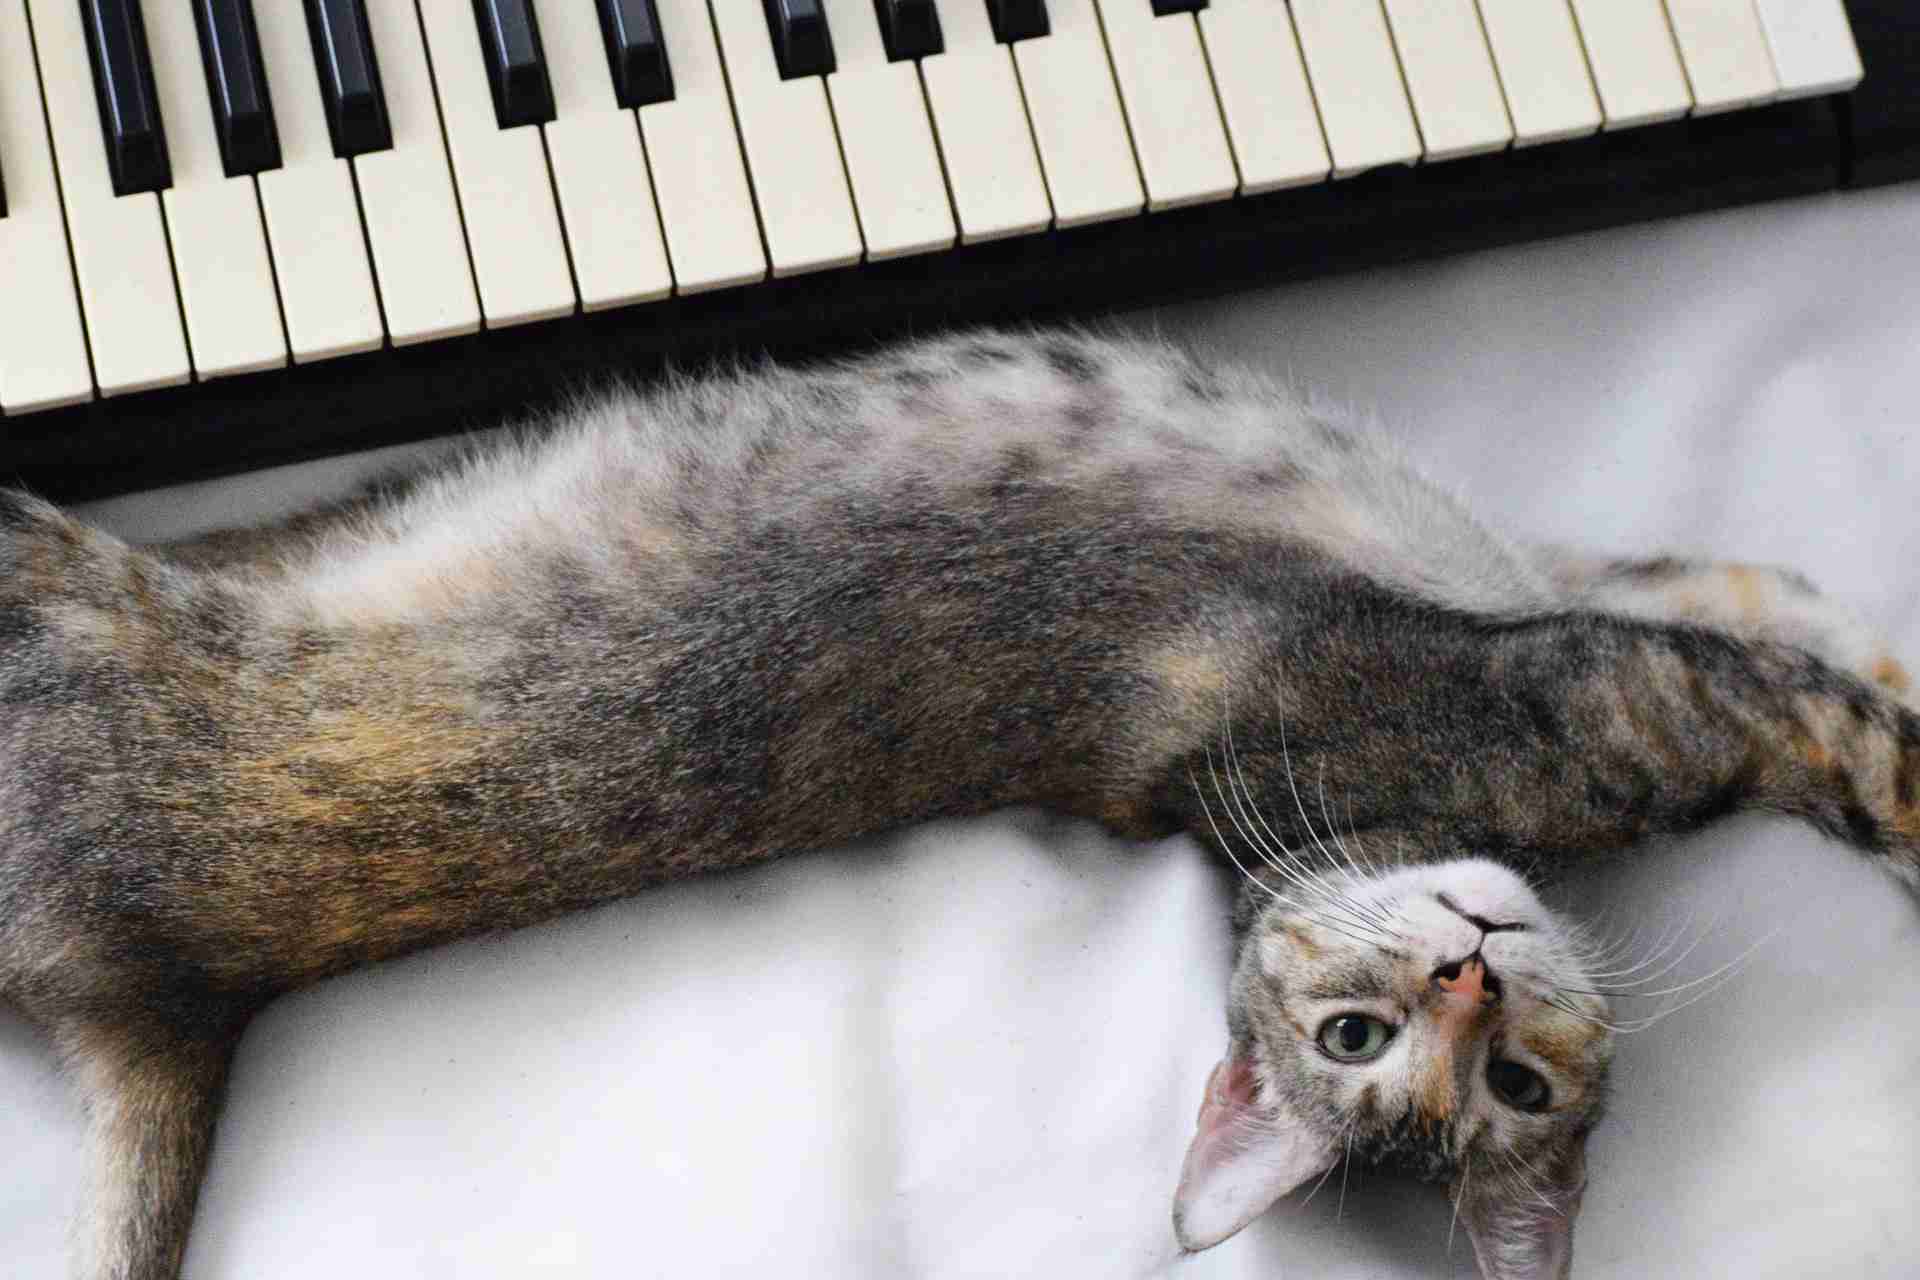 cat laying next to piano / keyboard